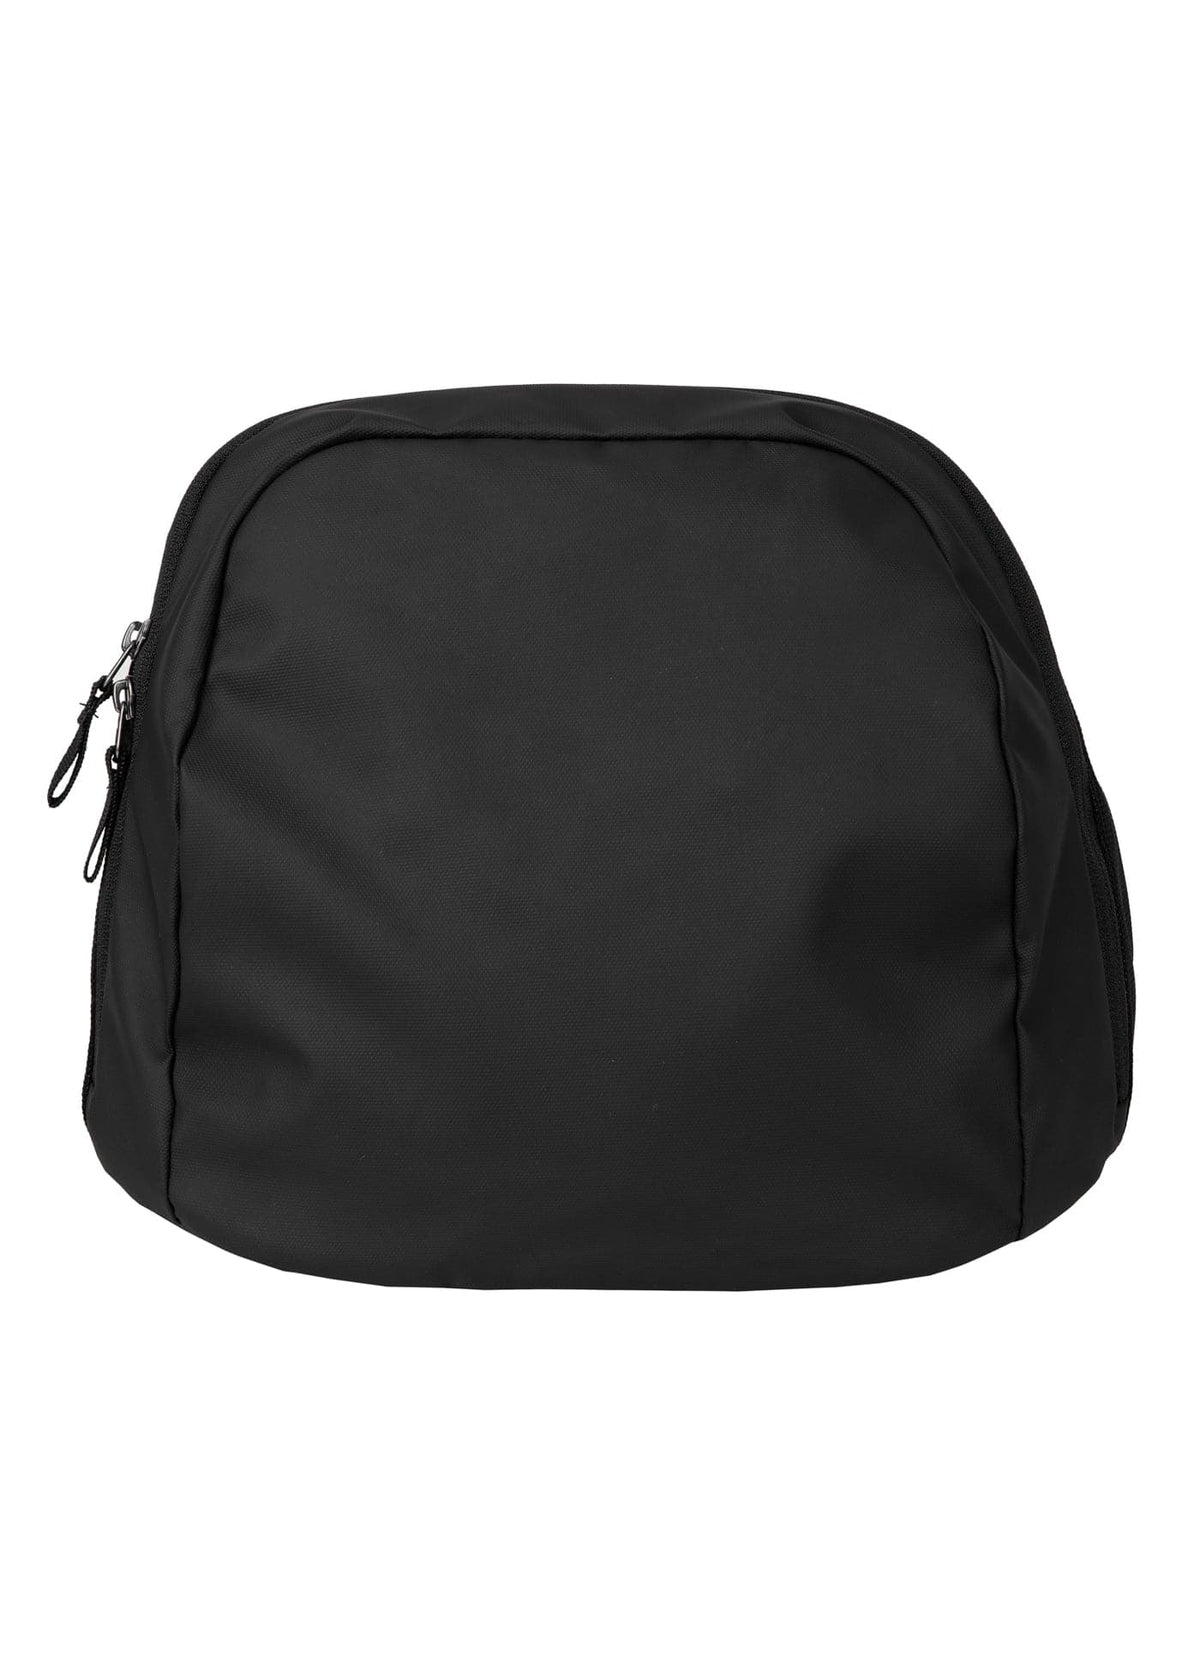 HILLTOP 2 Black Backpack - Pitbullstore.eu